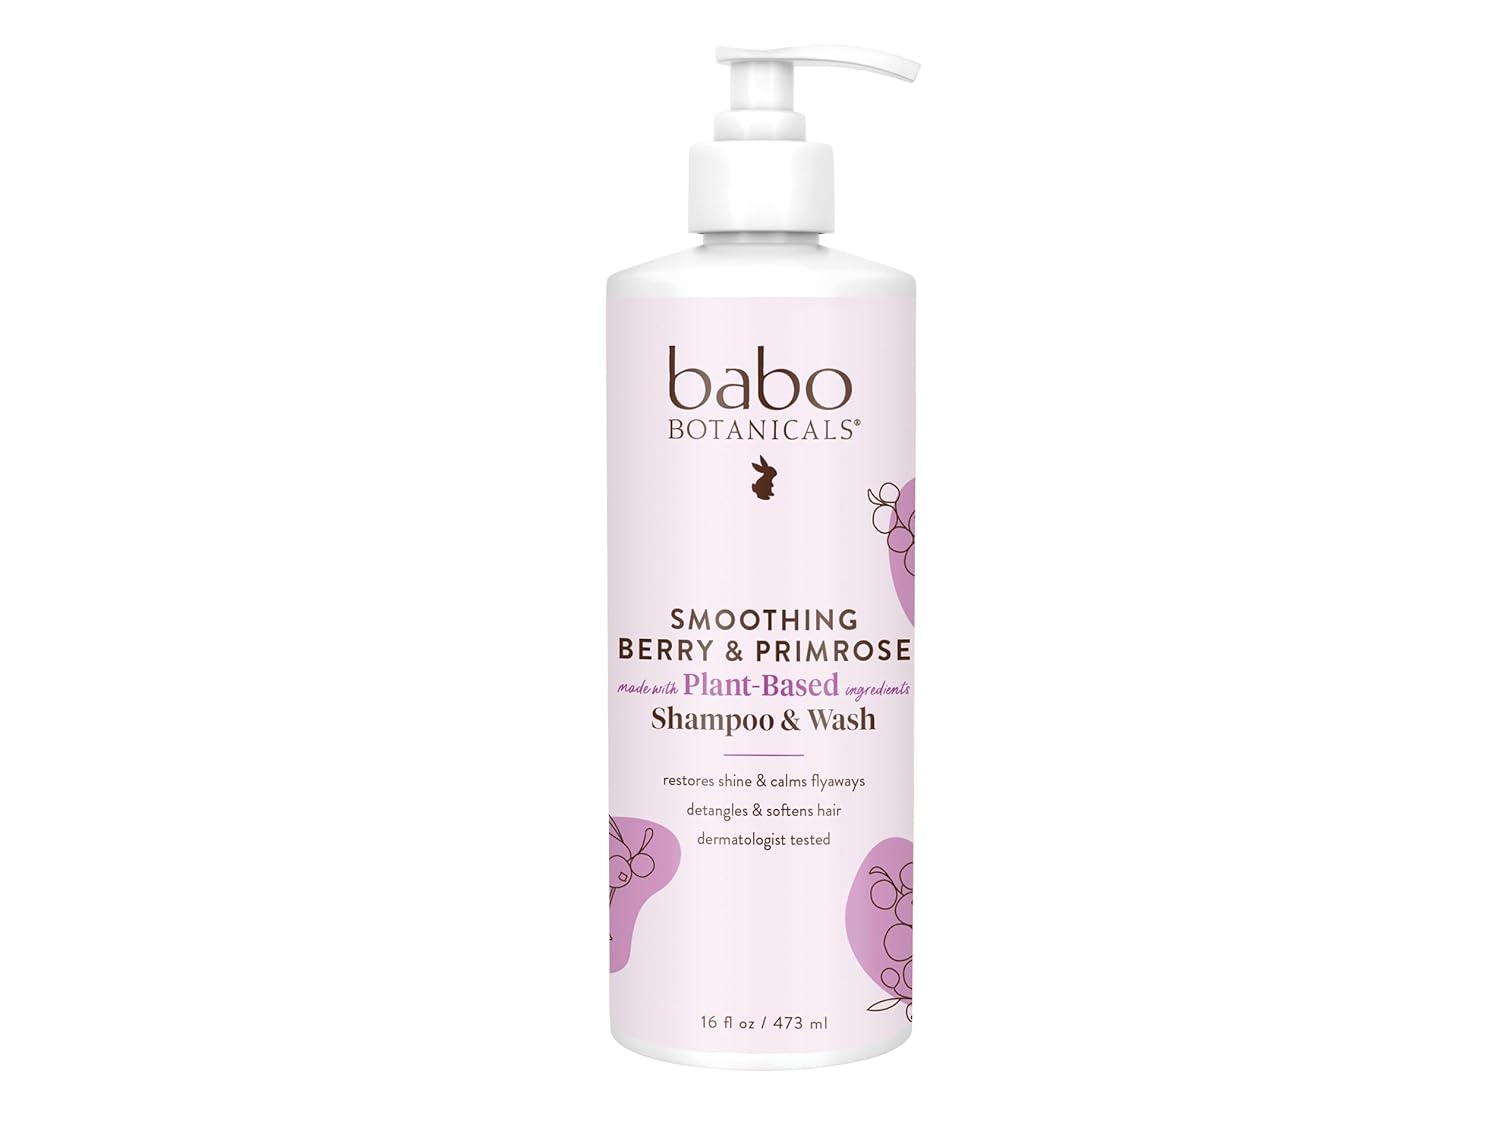 Babo Botanicals Smoothing Shampoo & Wash from gimme the good stuff